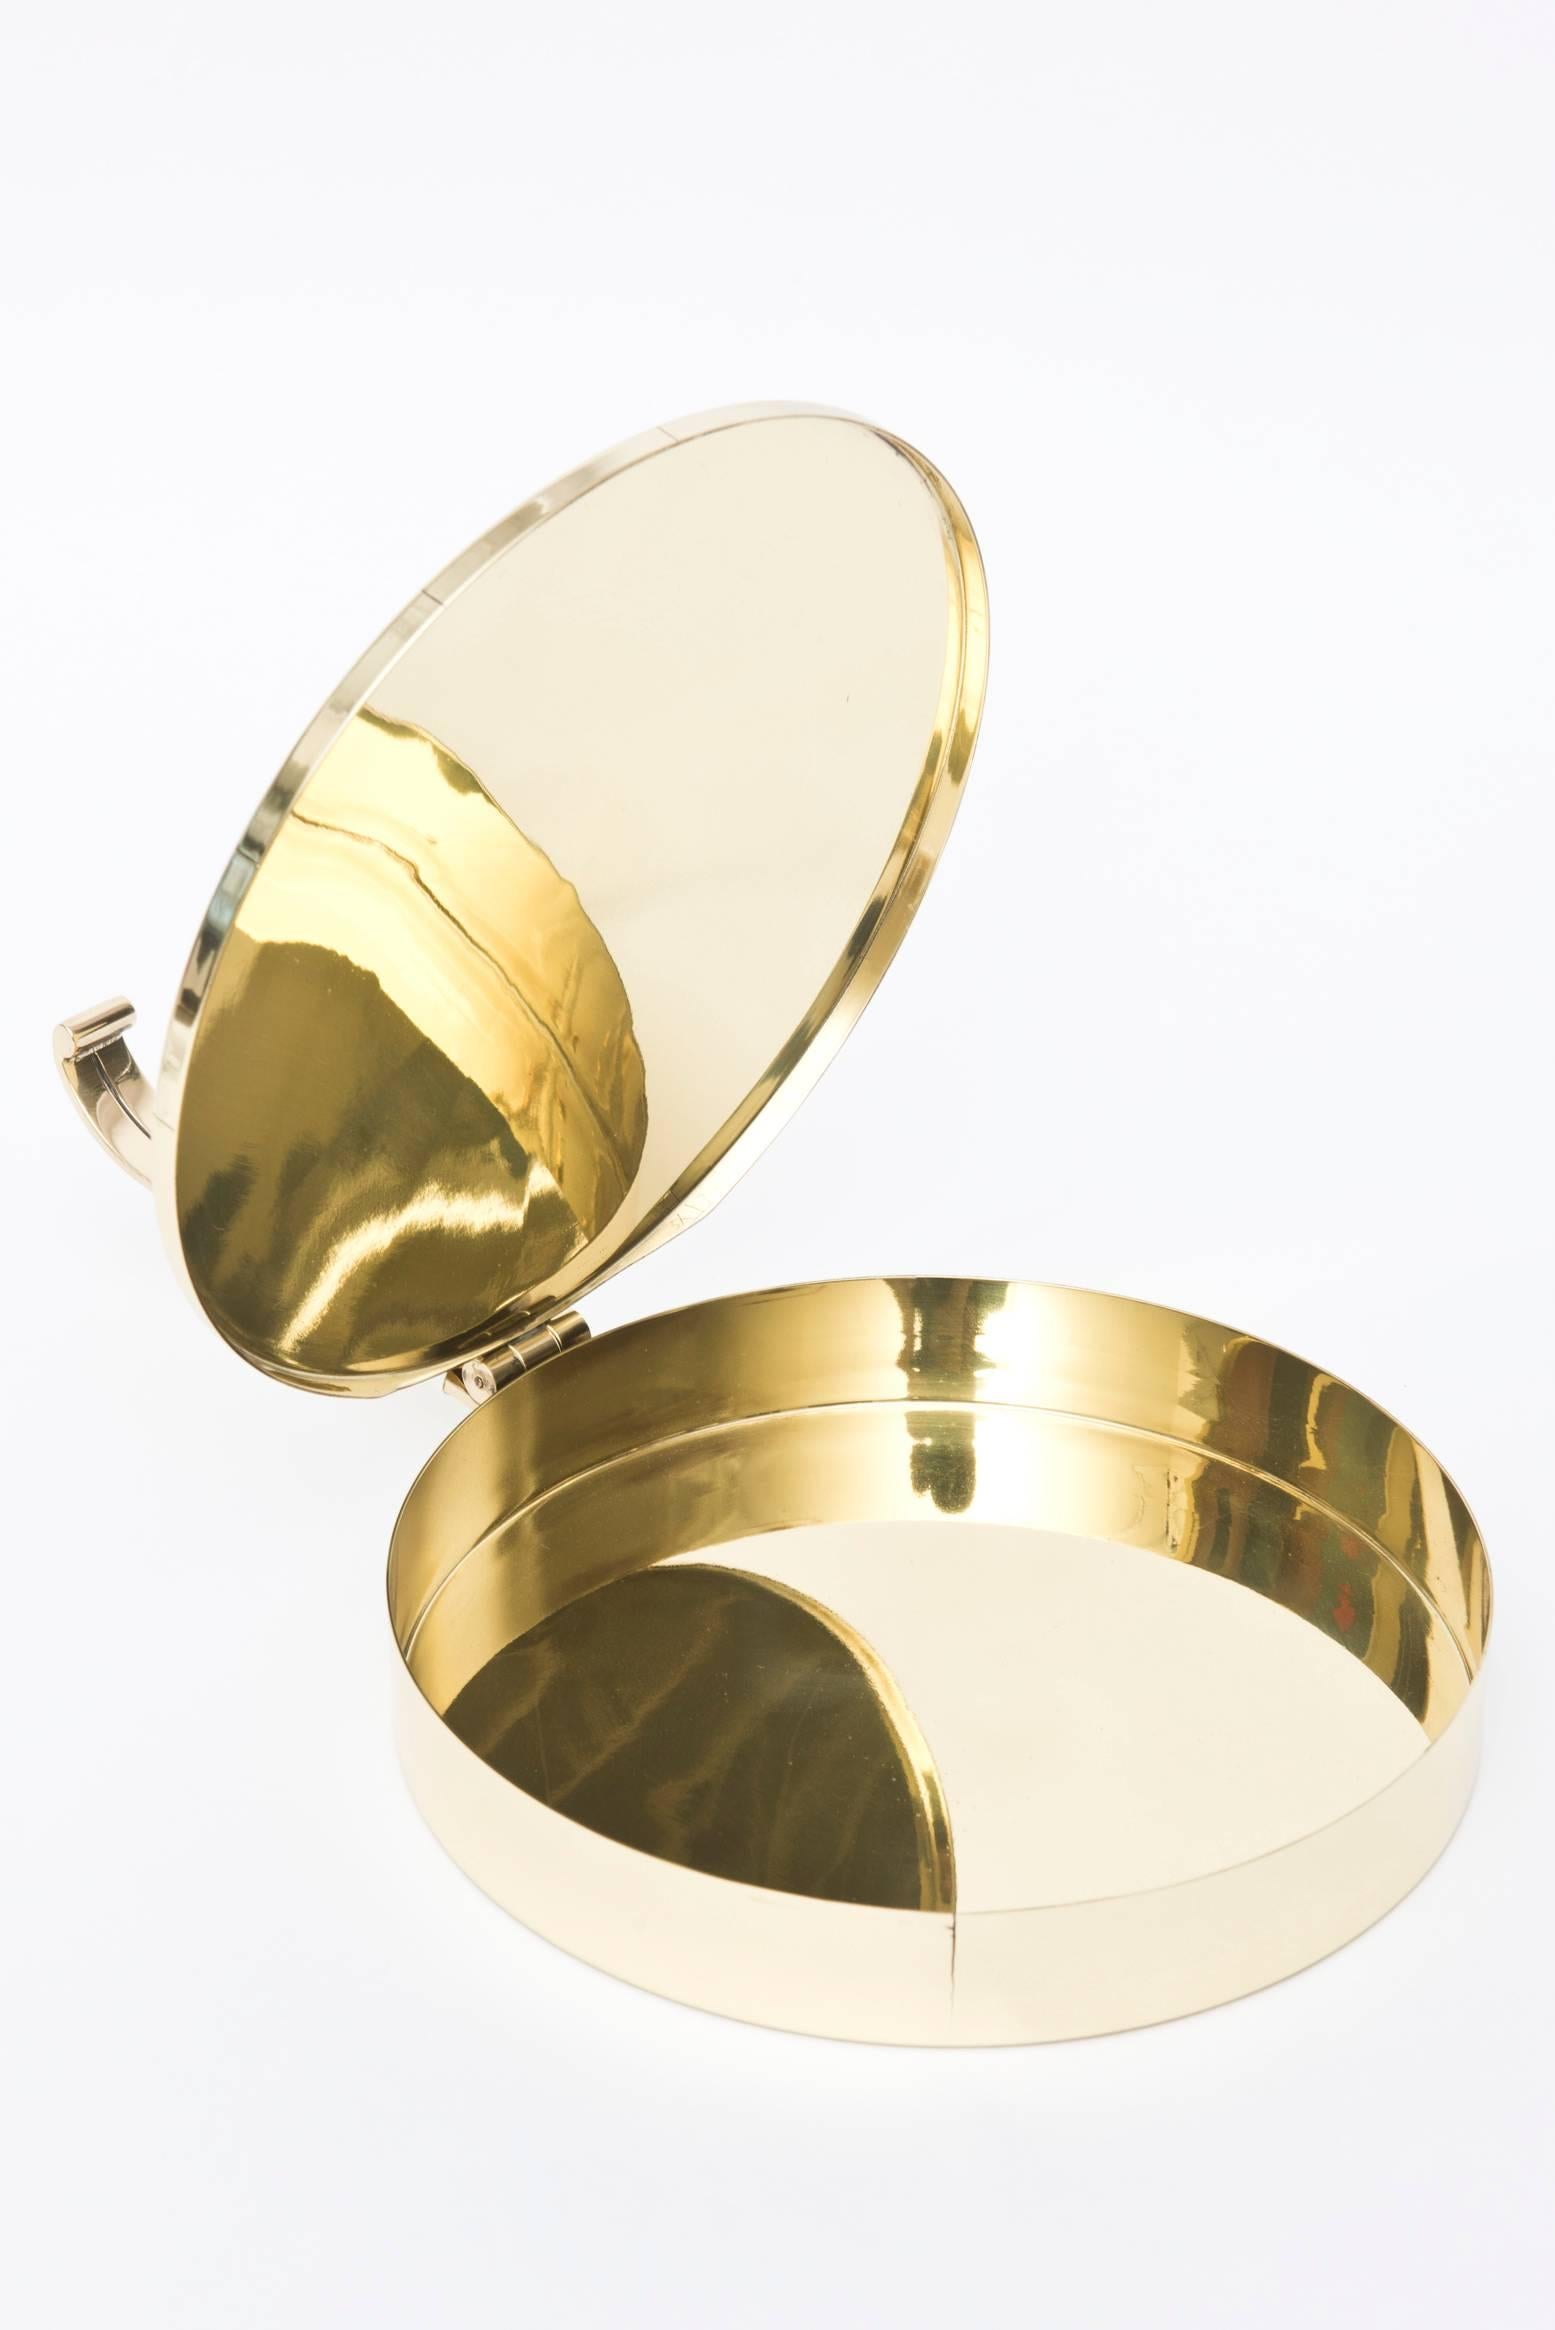 Tommi Parzinger Brass Box Mid-Century Modern en vente 2